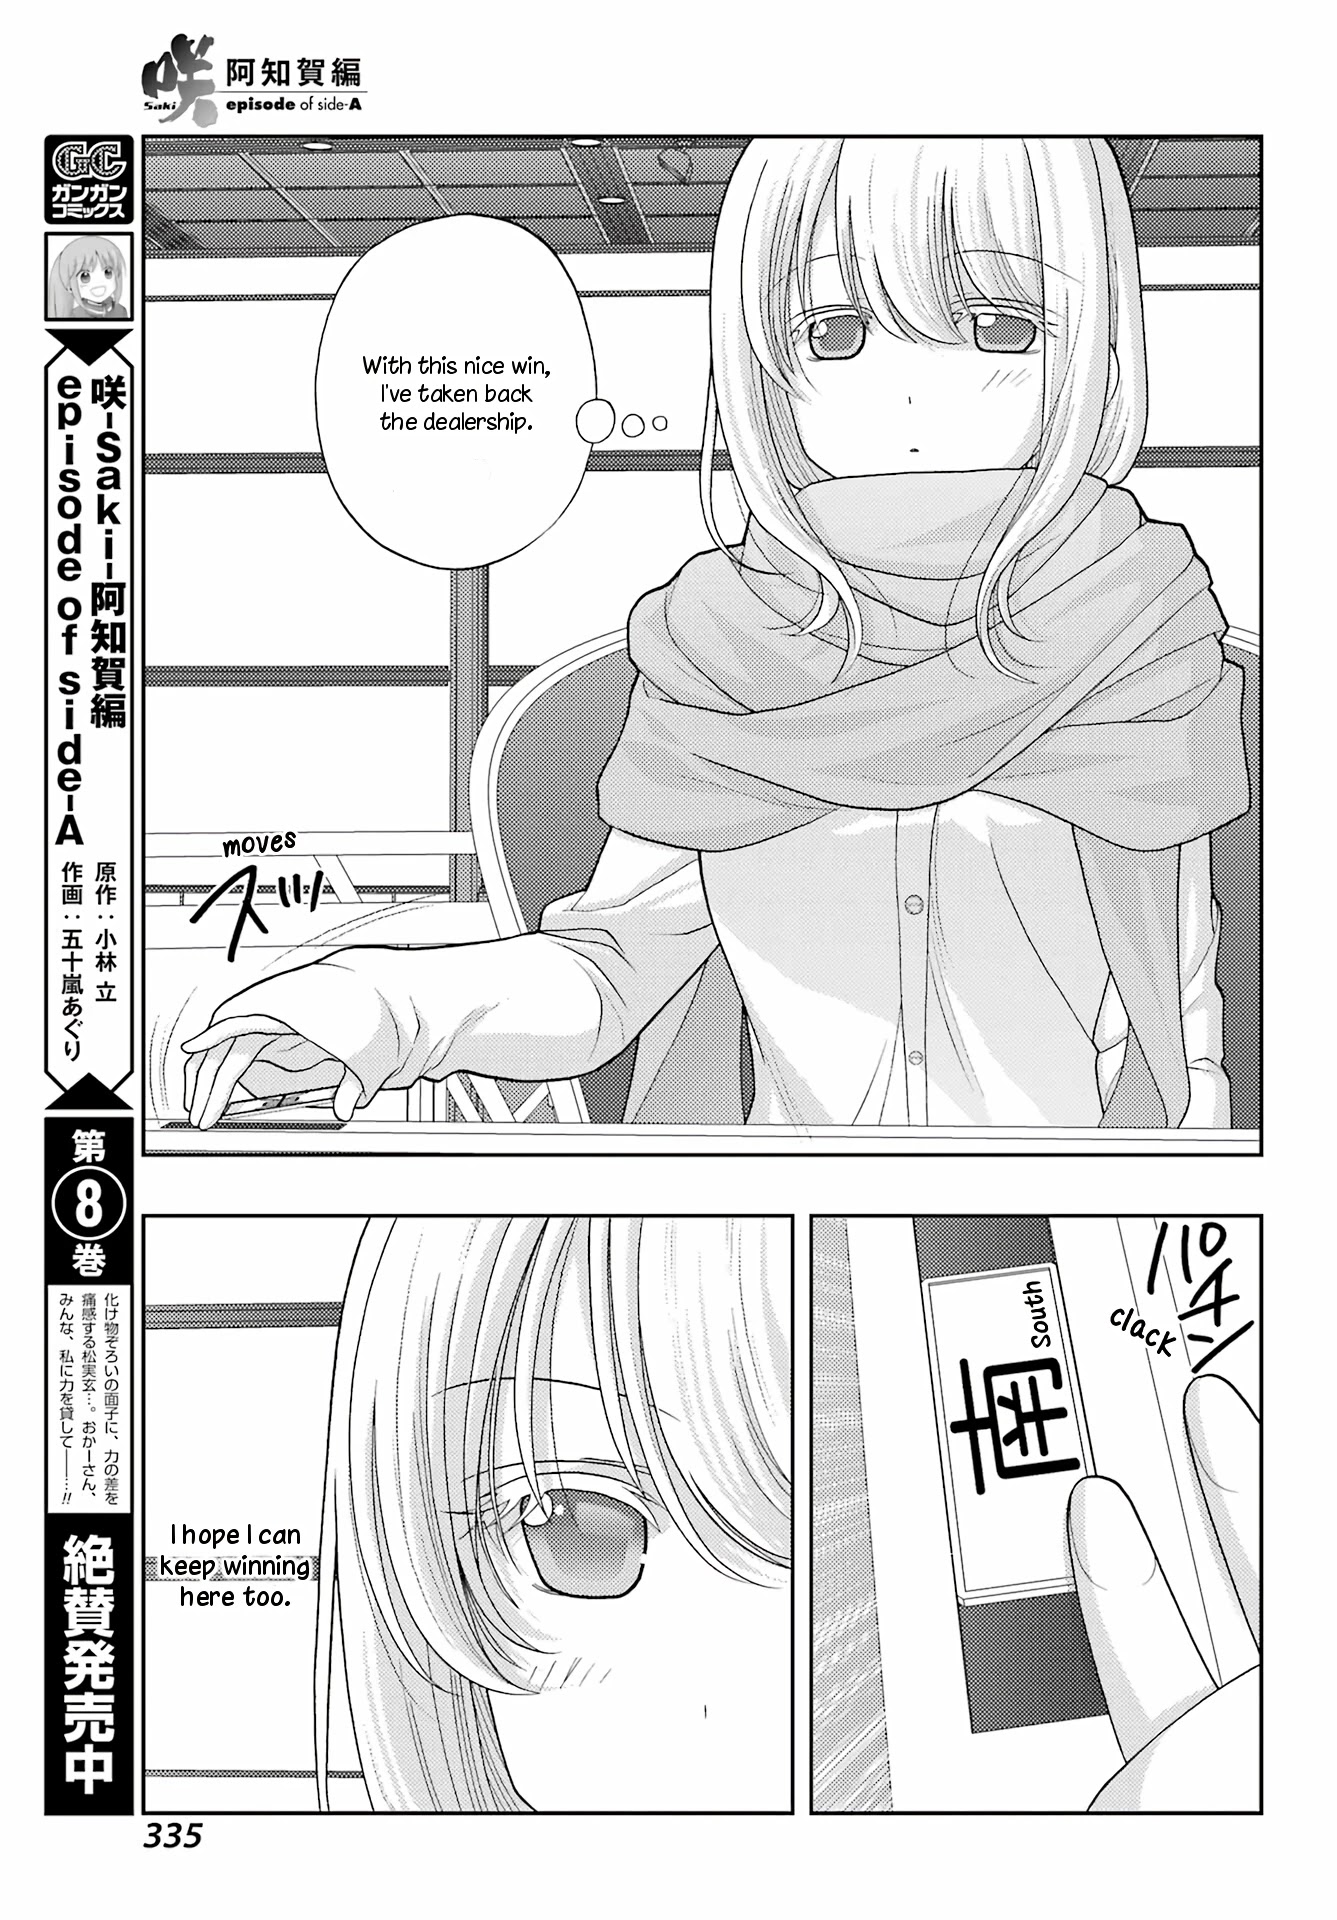 Saki: Achiga-Hen - Episode Of Side-A - New Series - Page 3